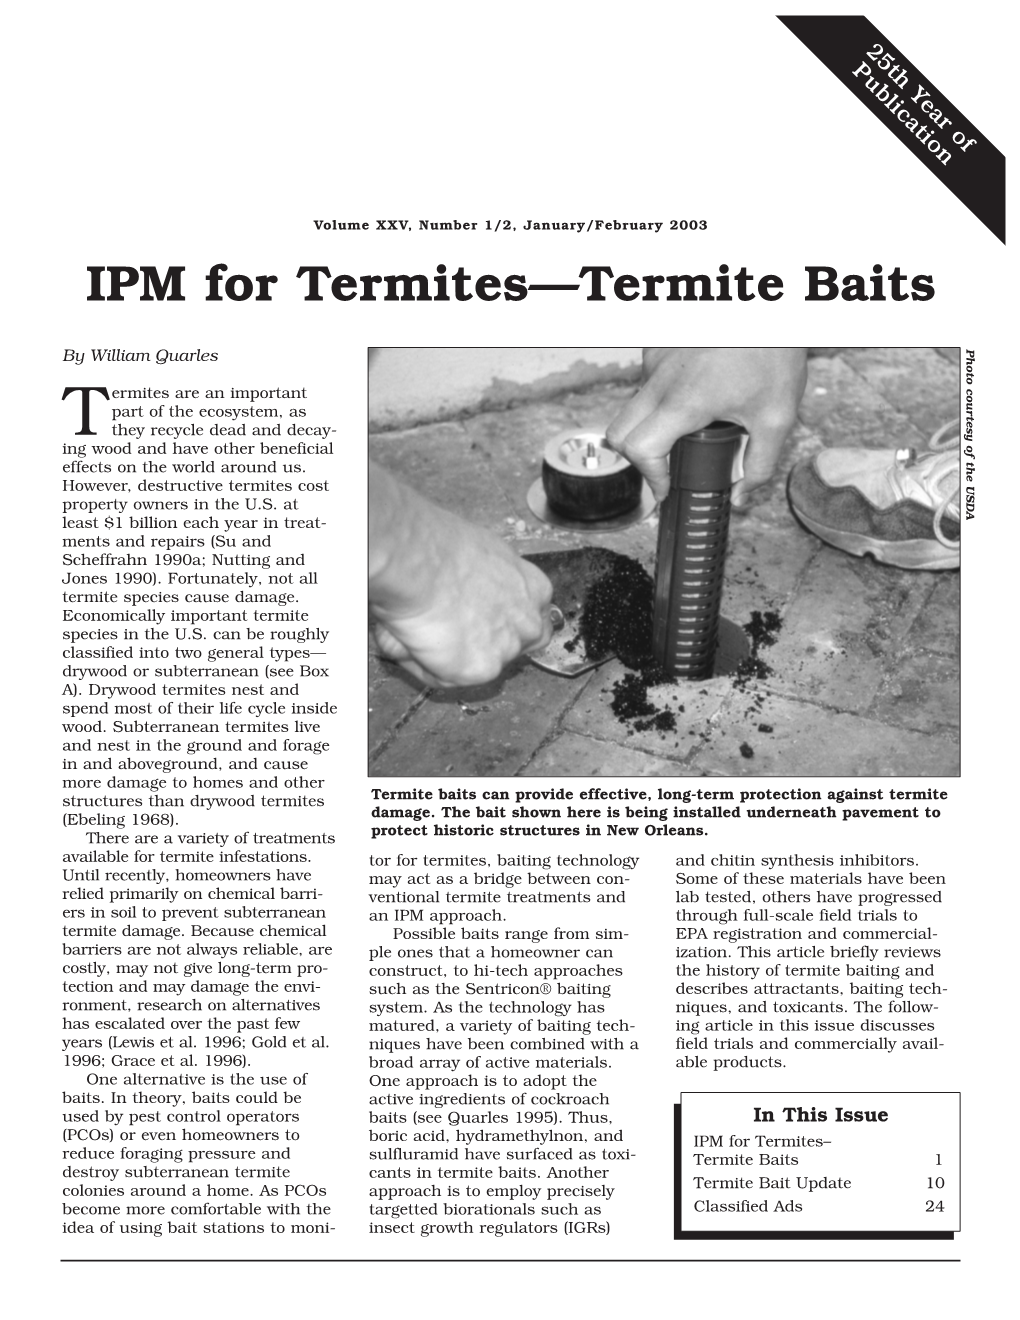 IPM for Termites—Termite Baits